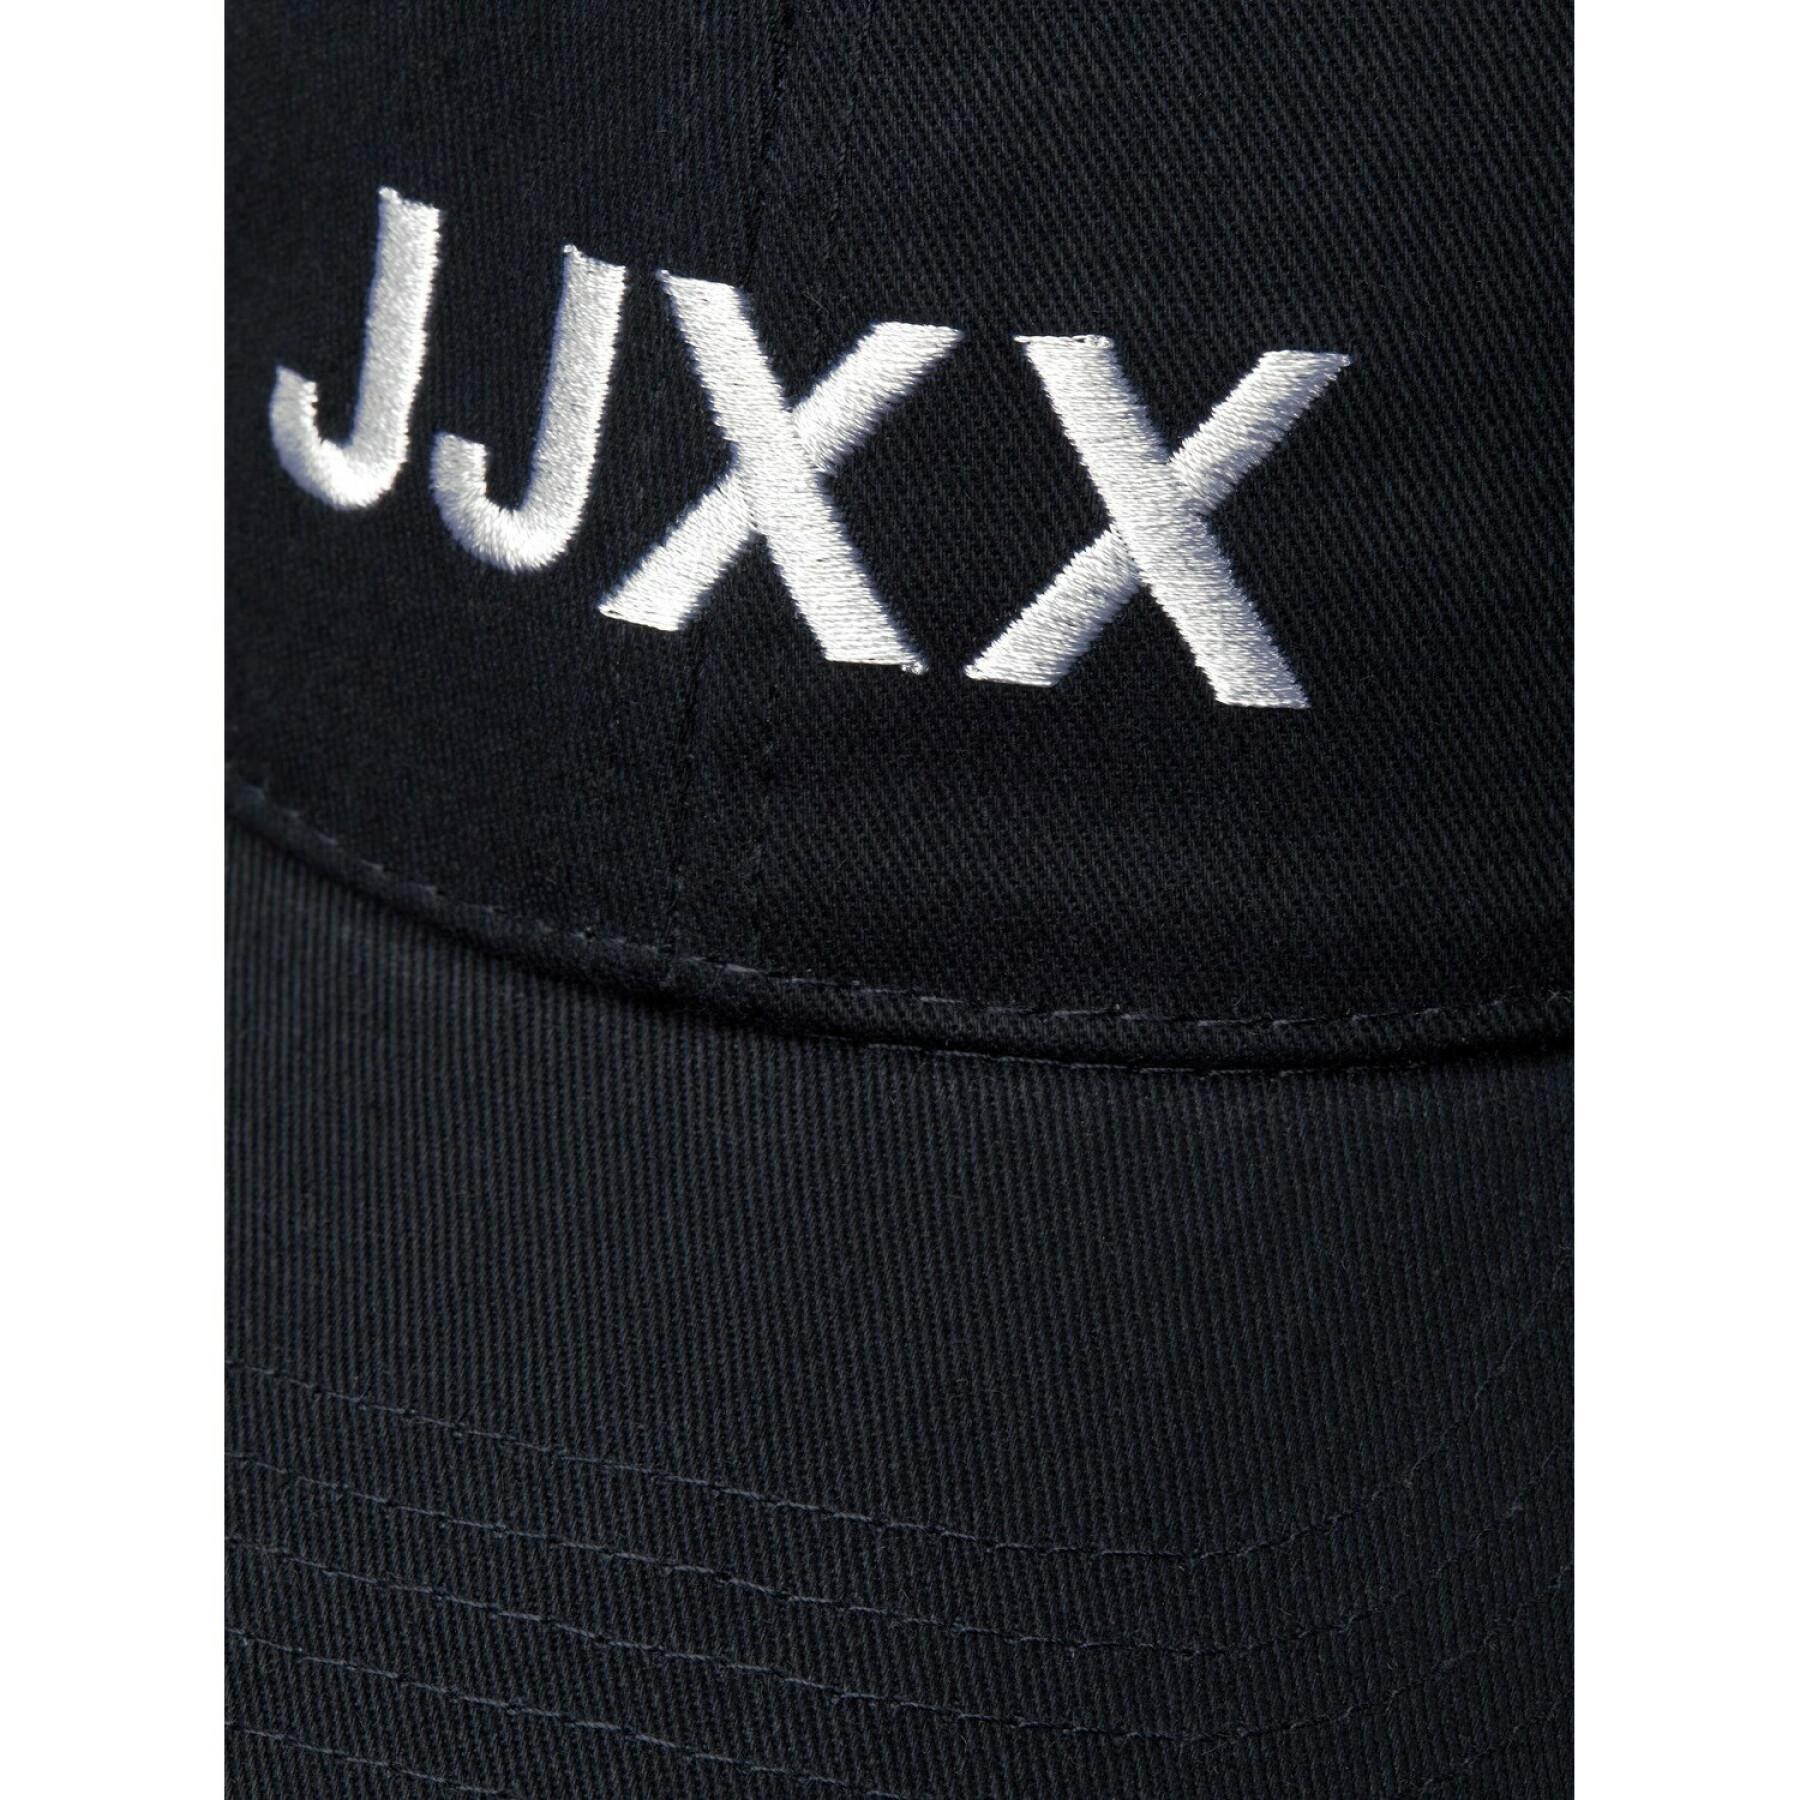 Casquette femme JJXX basic big logo